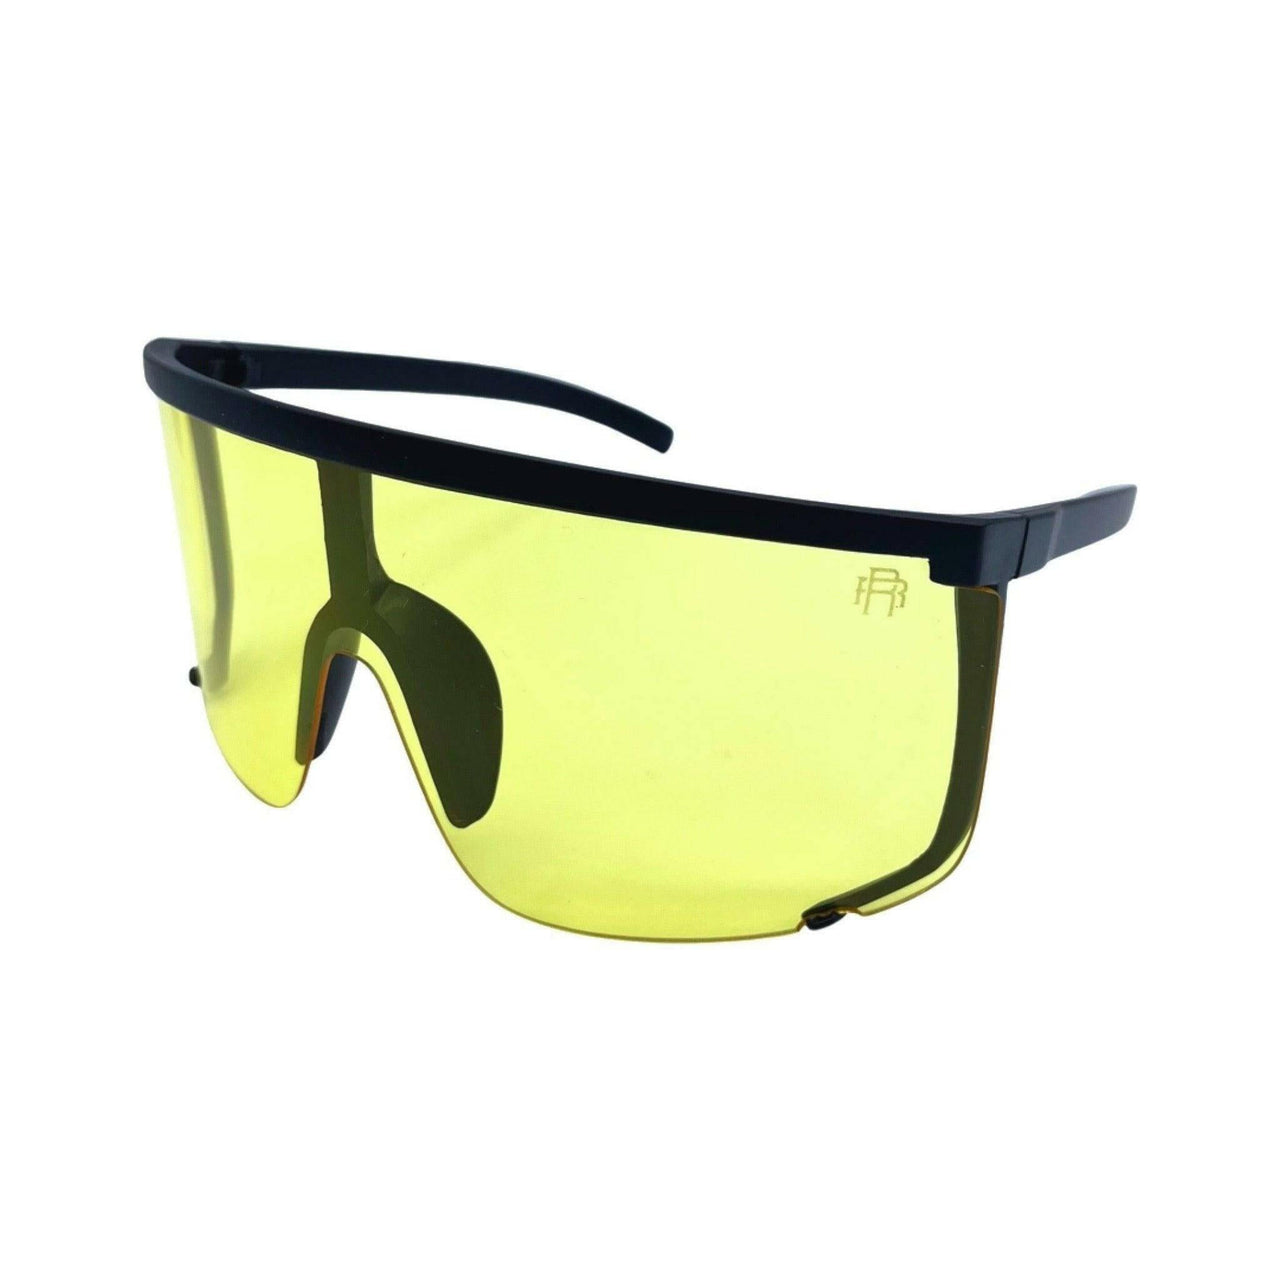 Steezy Yellow Transparent Sunglasses - Rebel Reaper Clothing Company Sunglasses